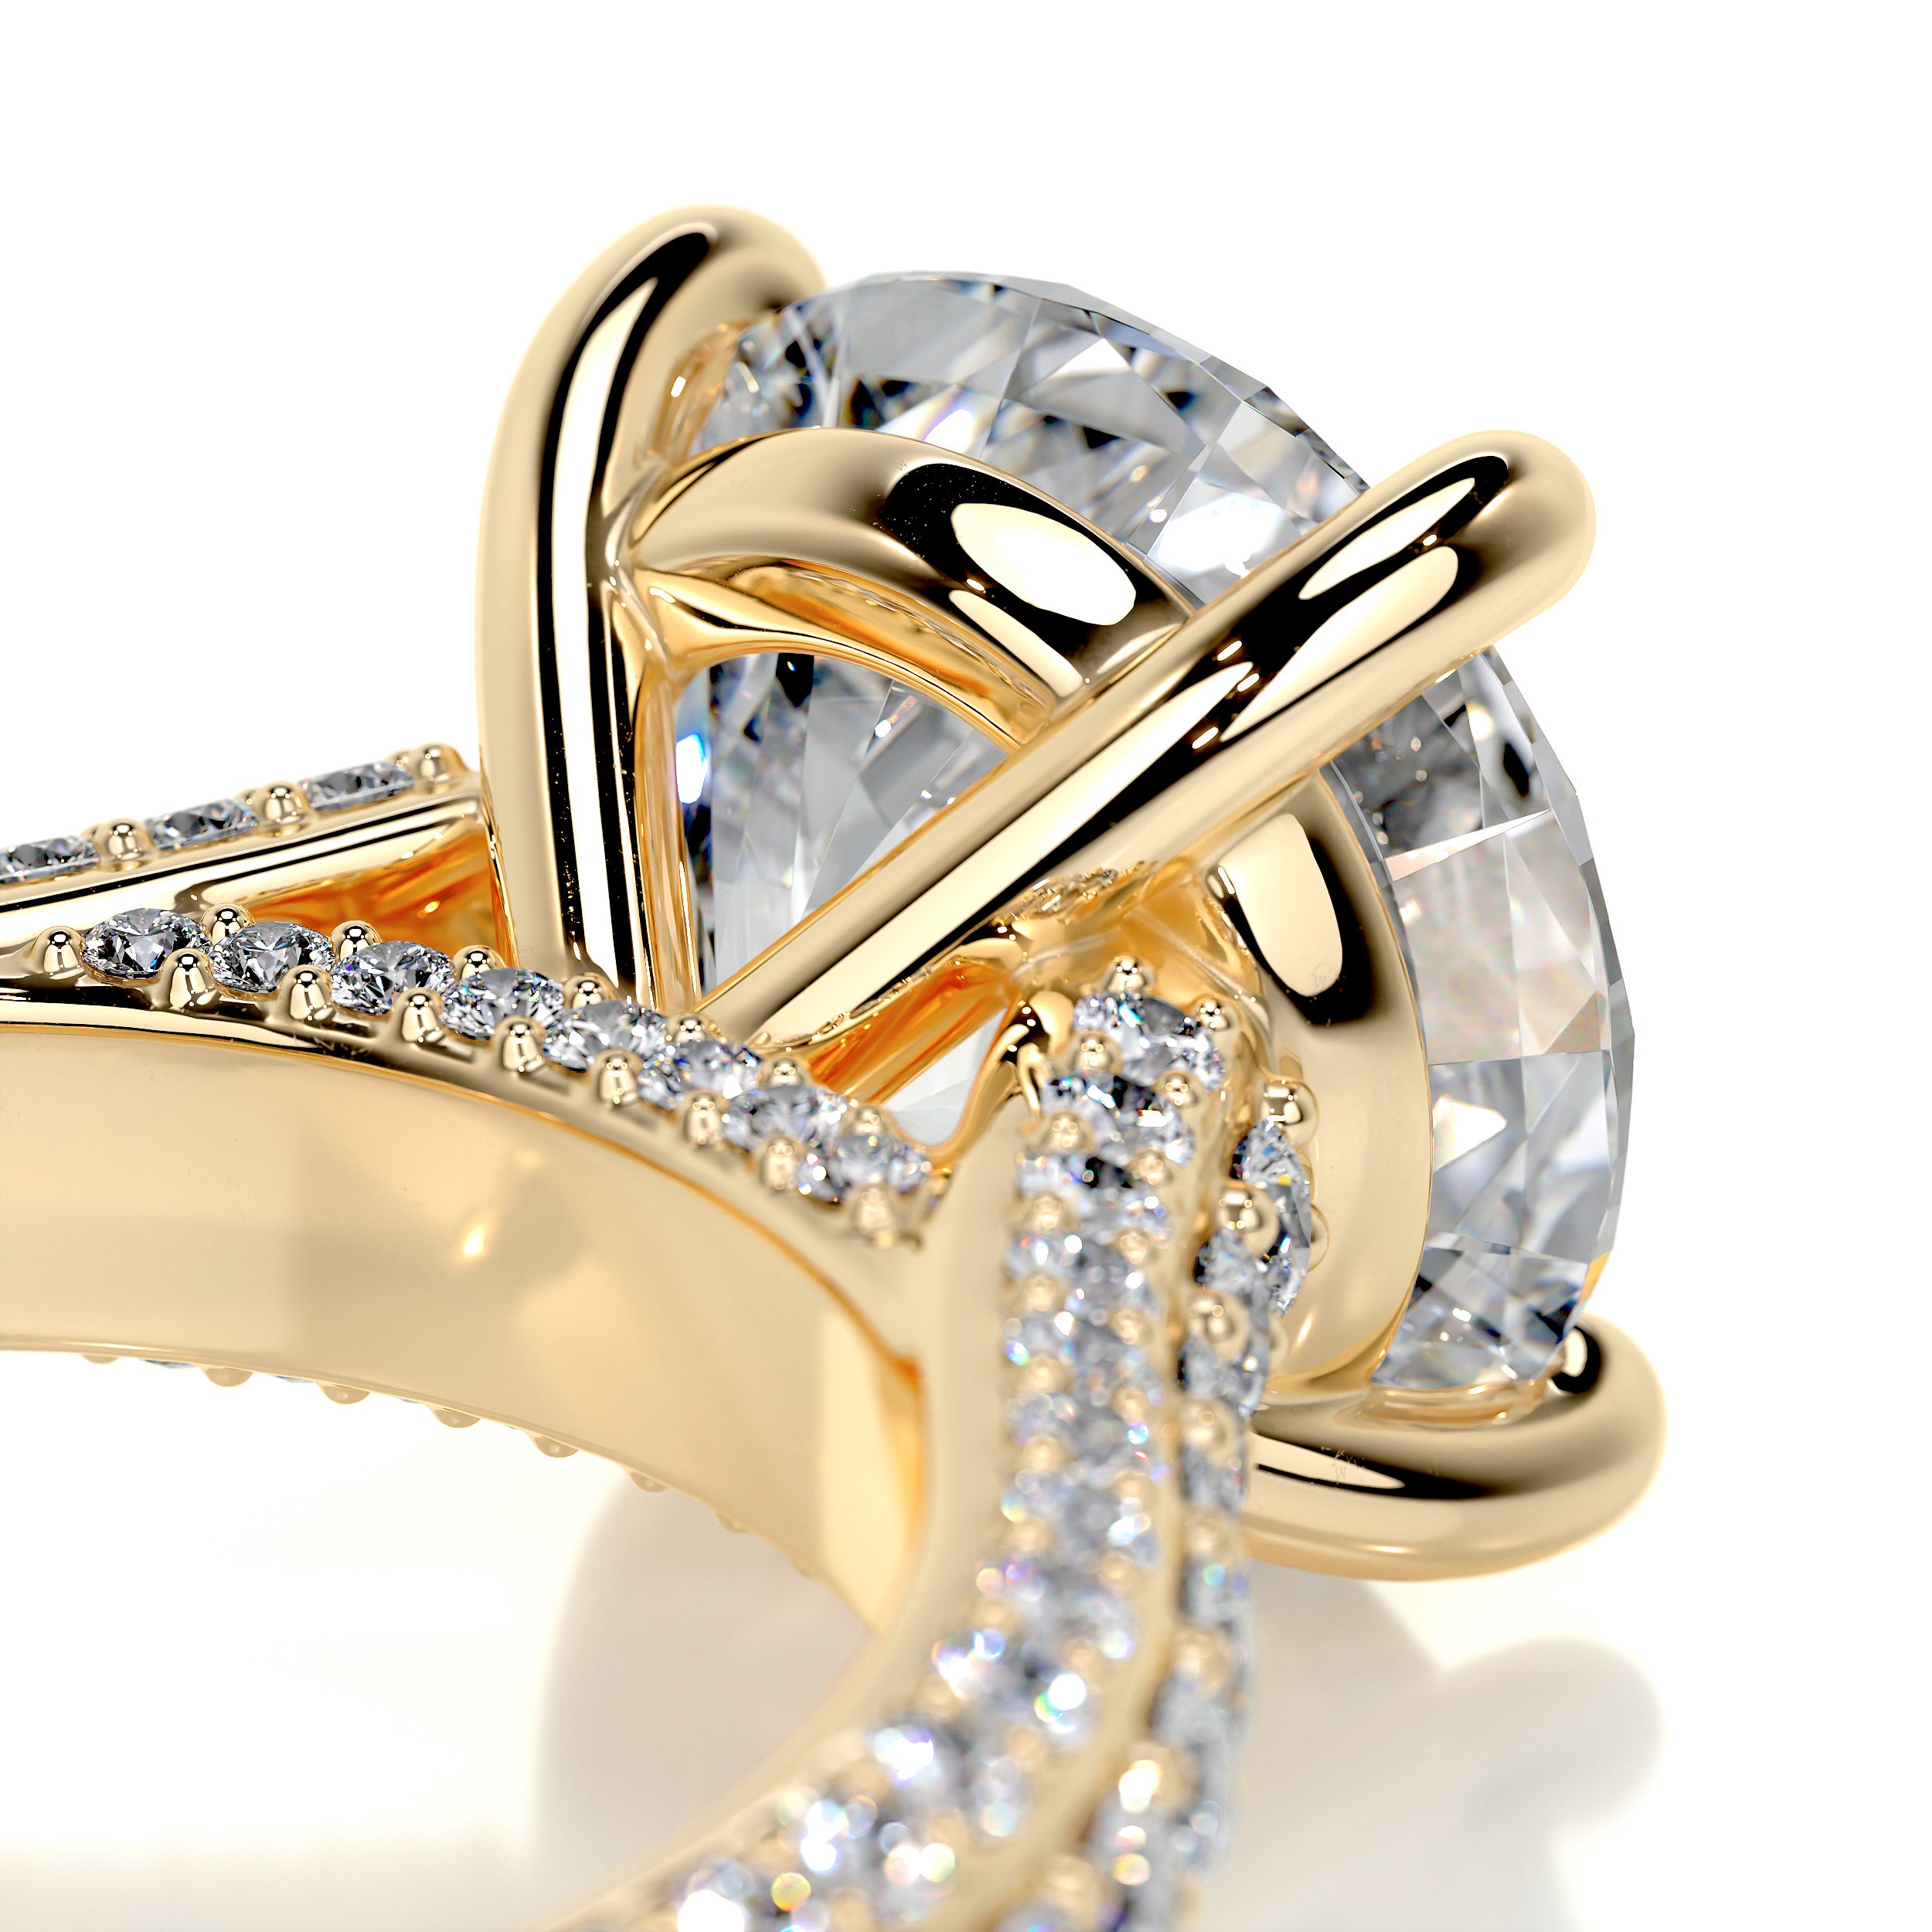 Janet Diamond Engagement Ring -18K Yellow Gold